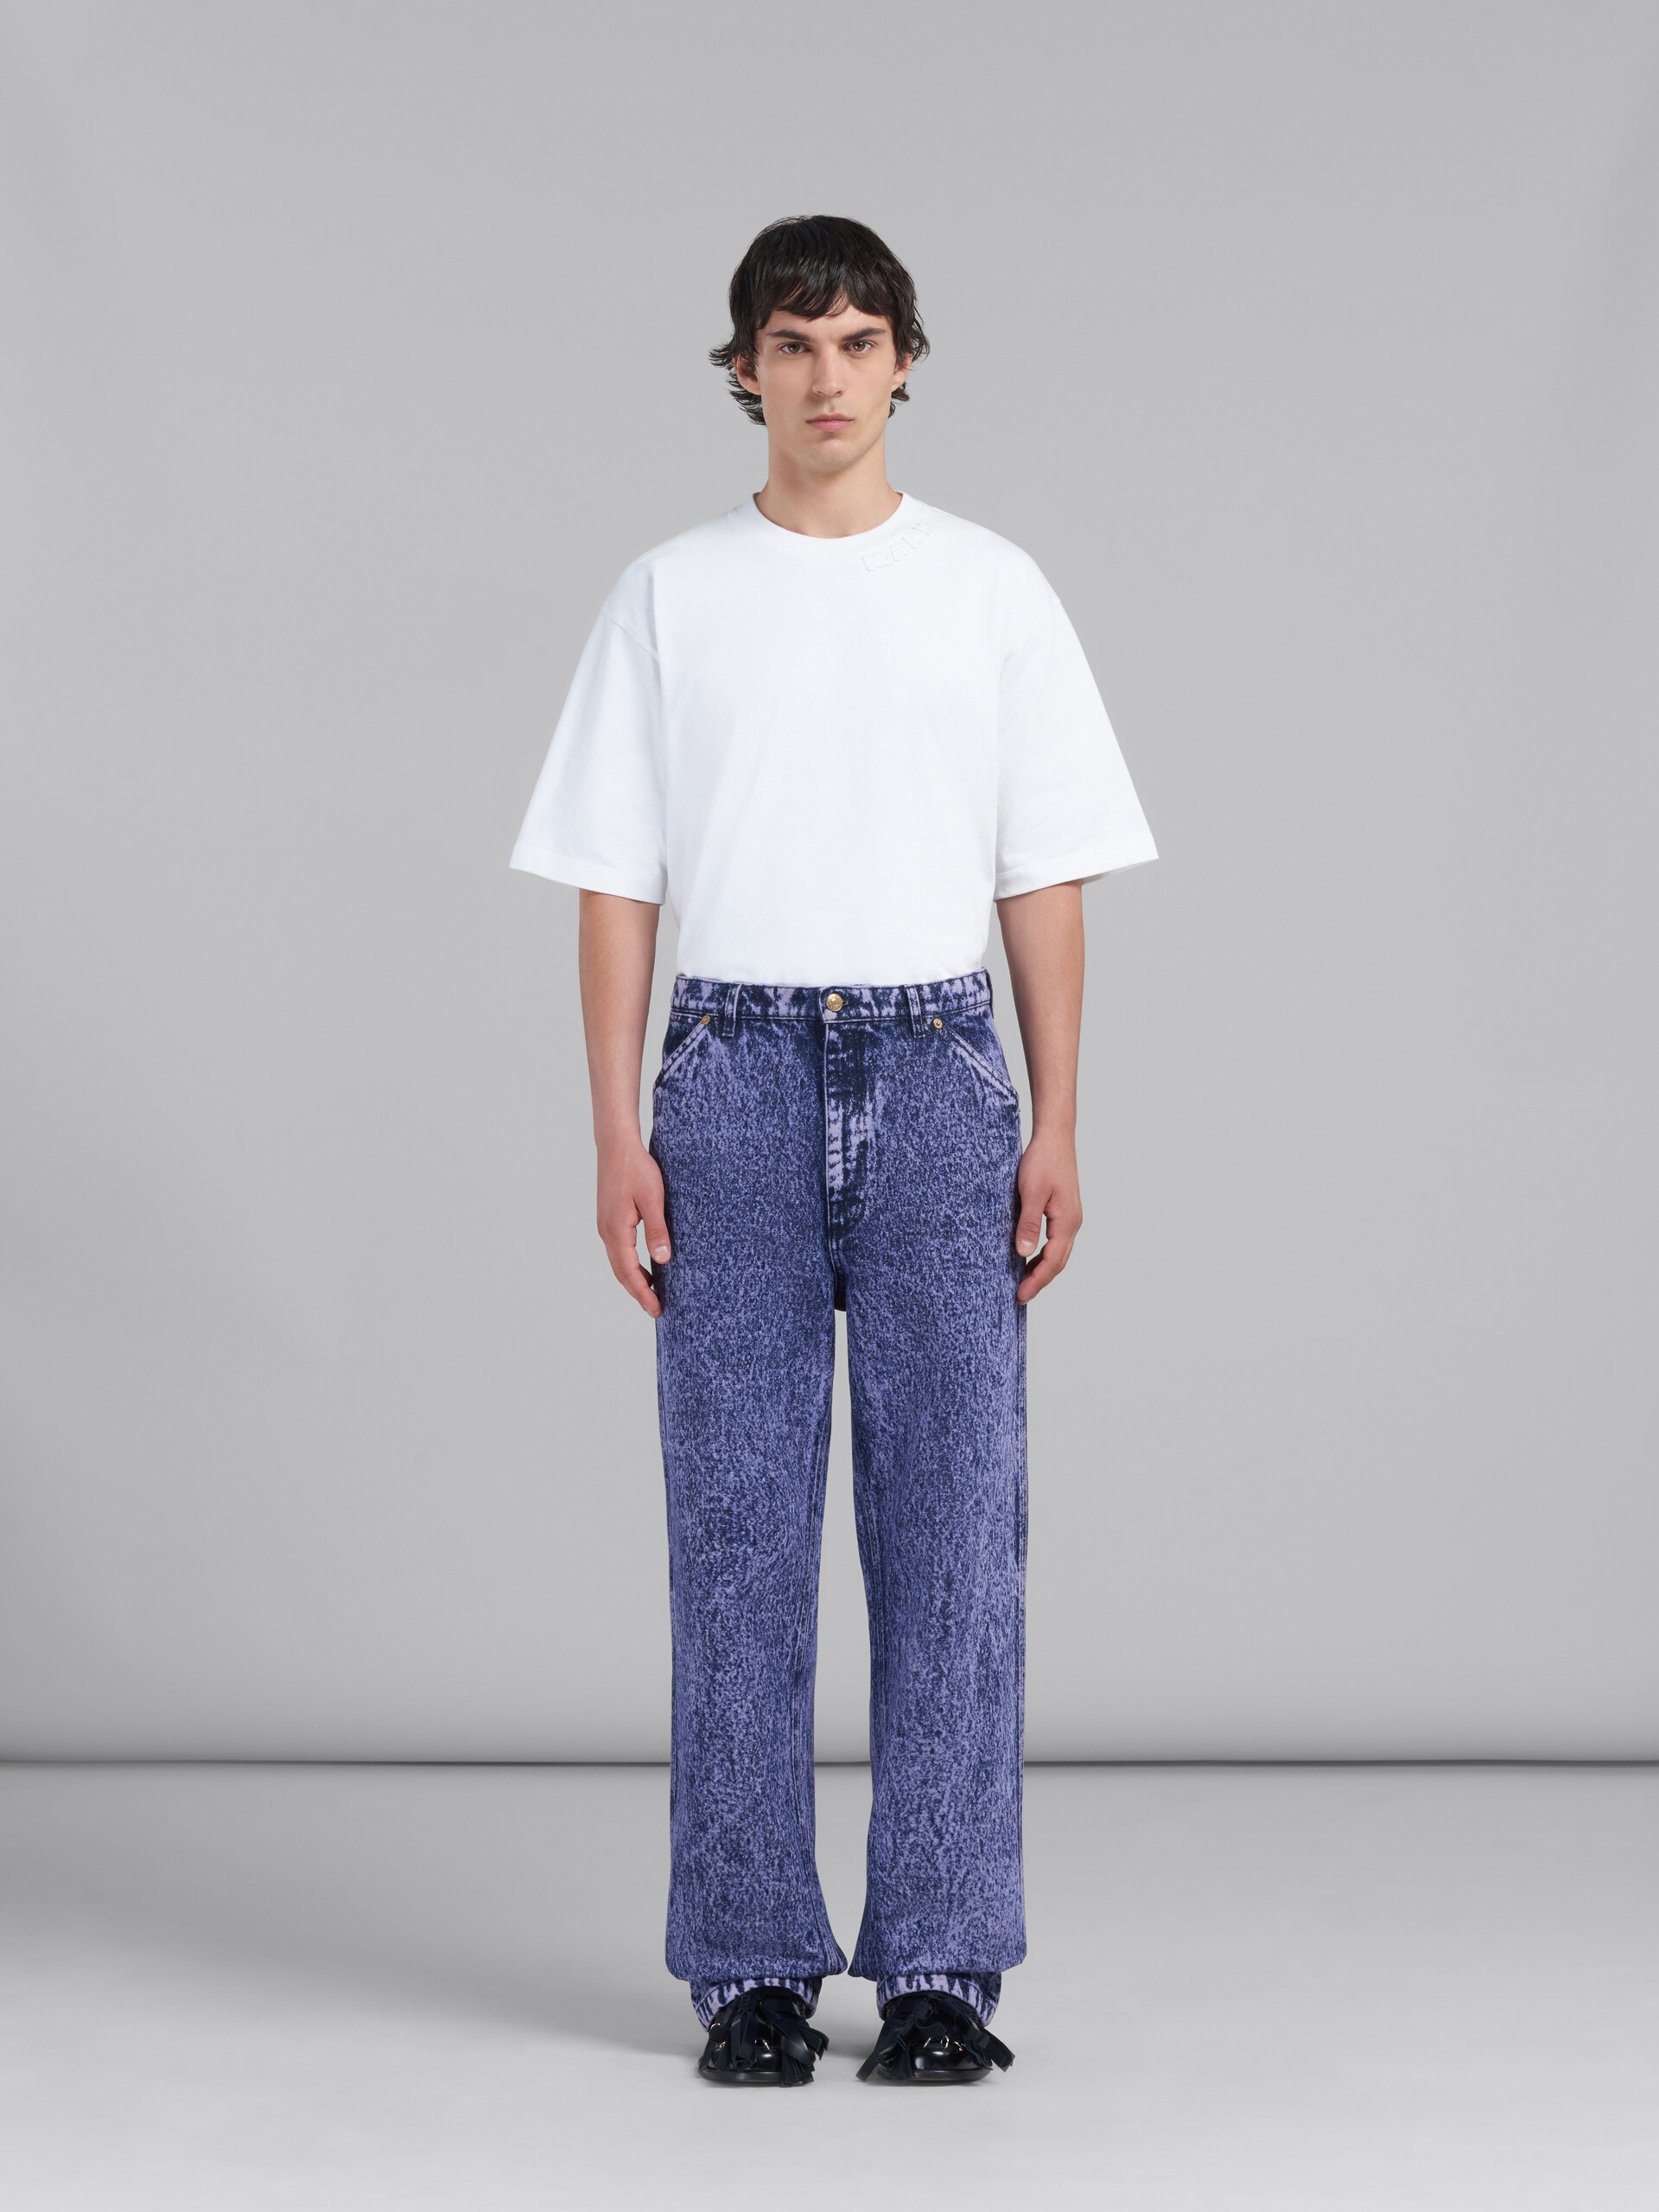 Baue Denim-Jeans mit marmoriertem Finish - Hosen - Image 2